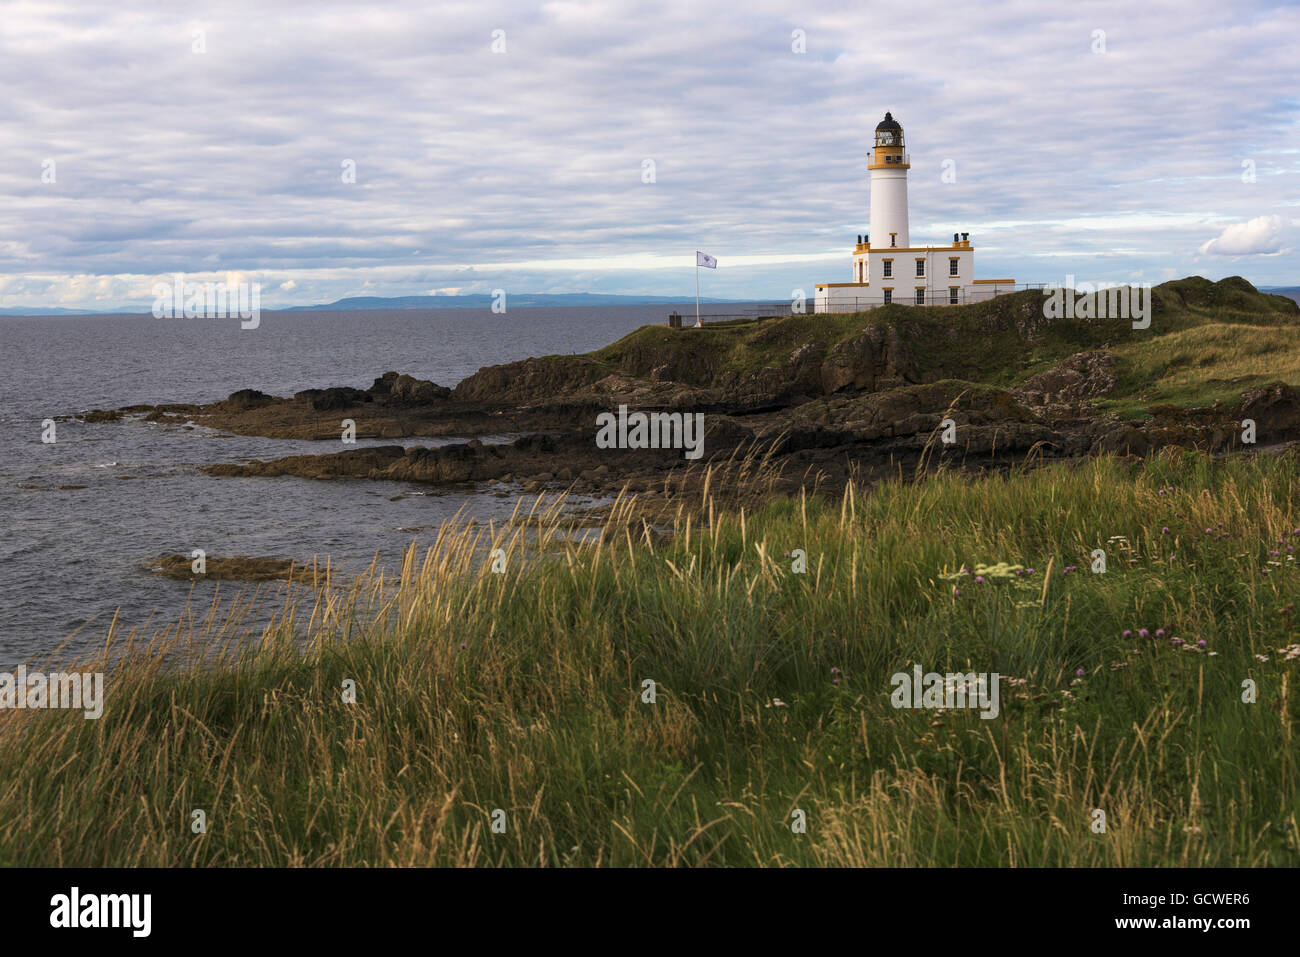 A lighthouse along the coast; Scotland Stock Photo